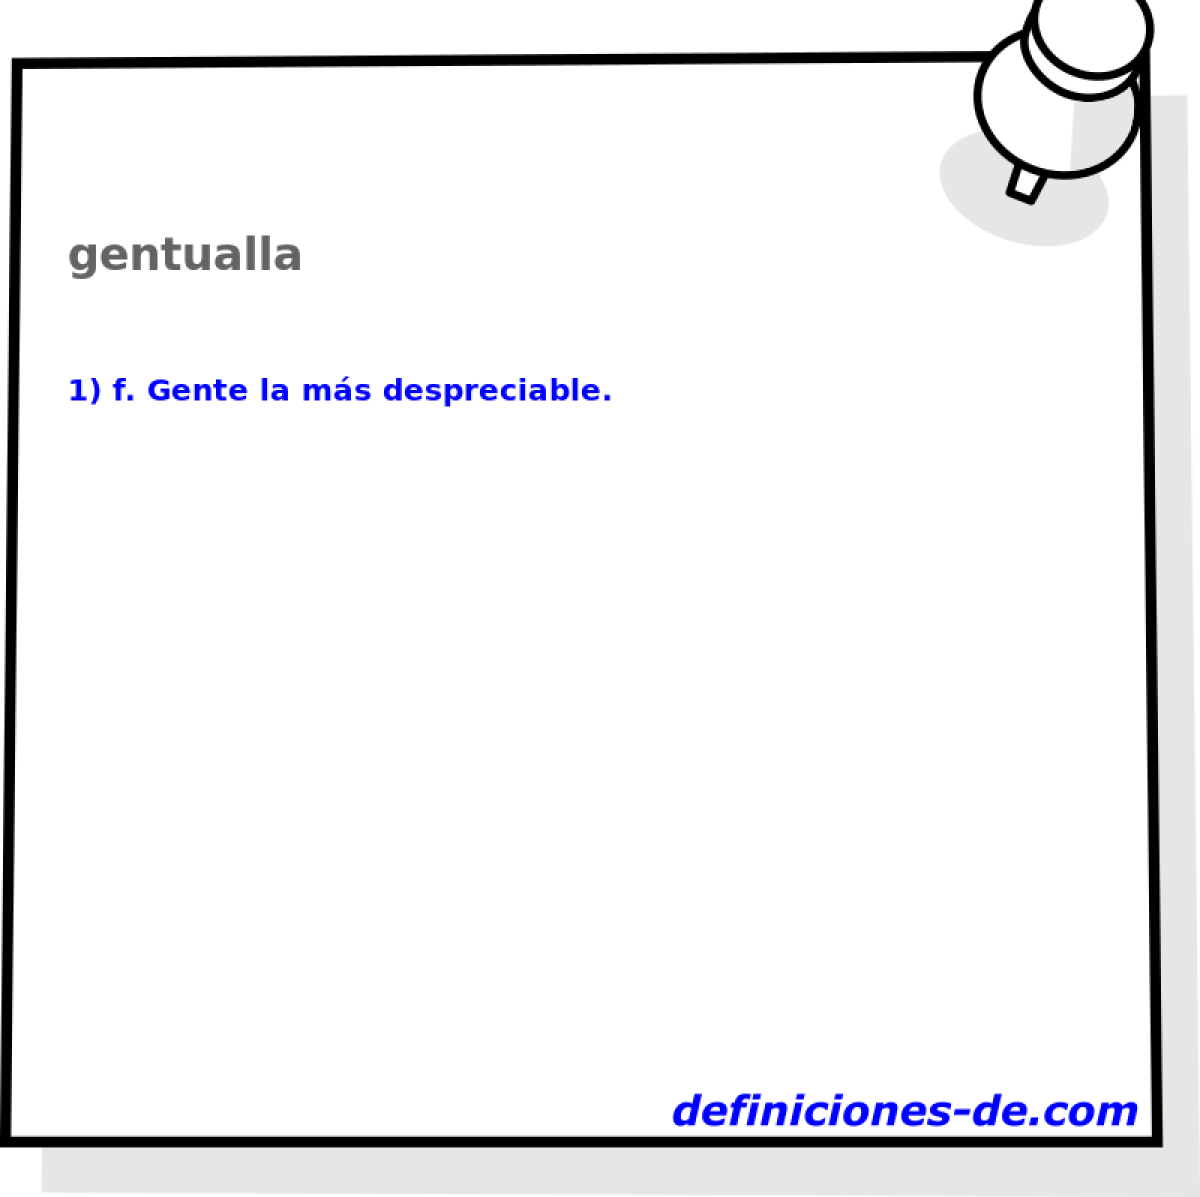 gentualla 